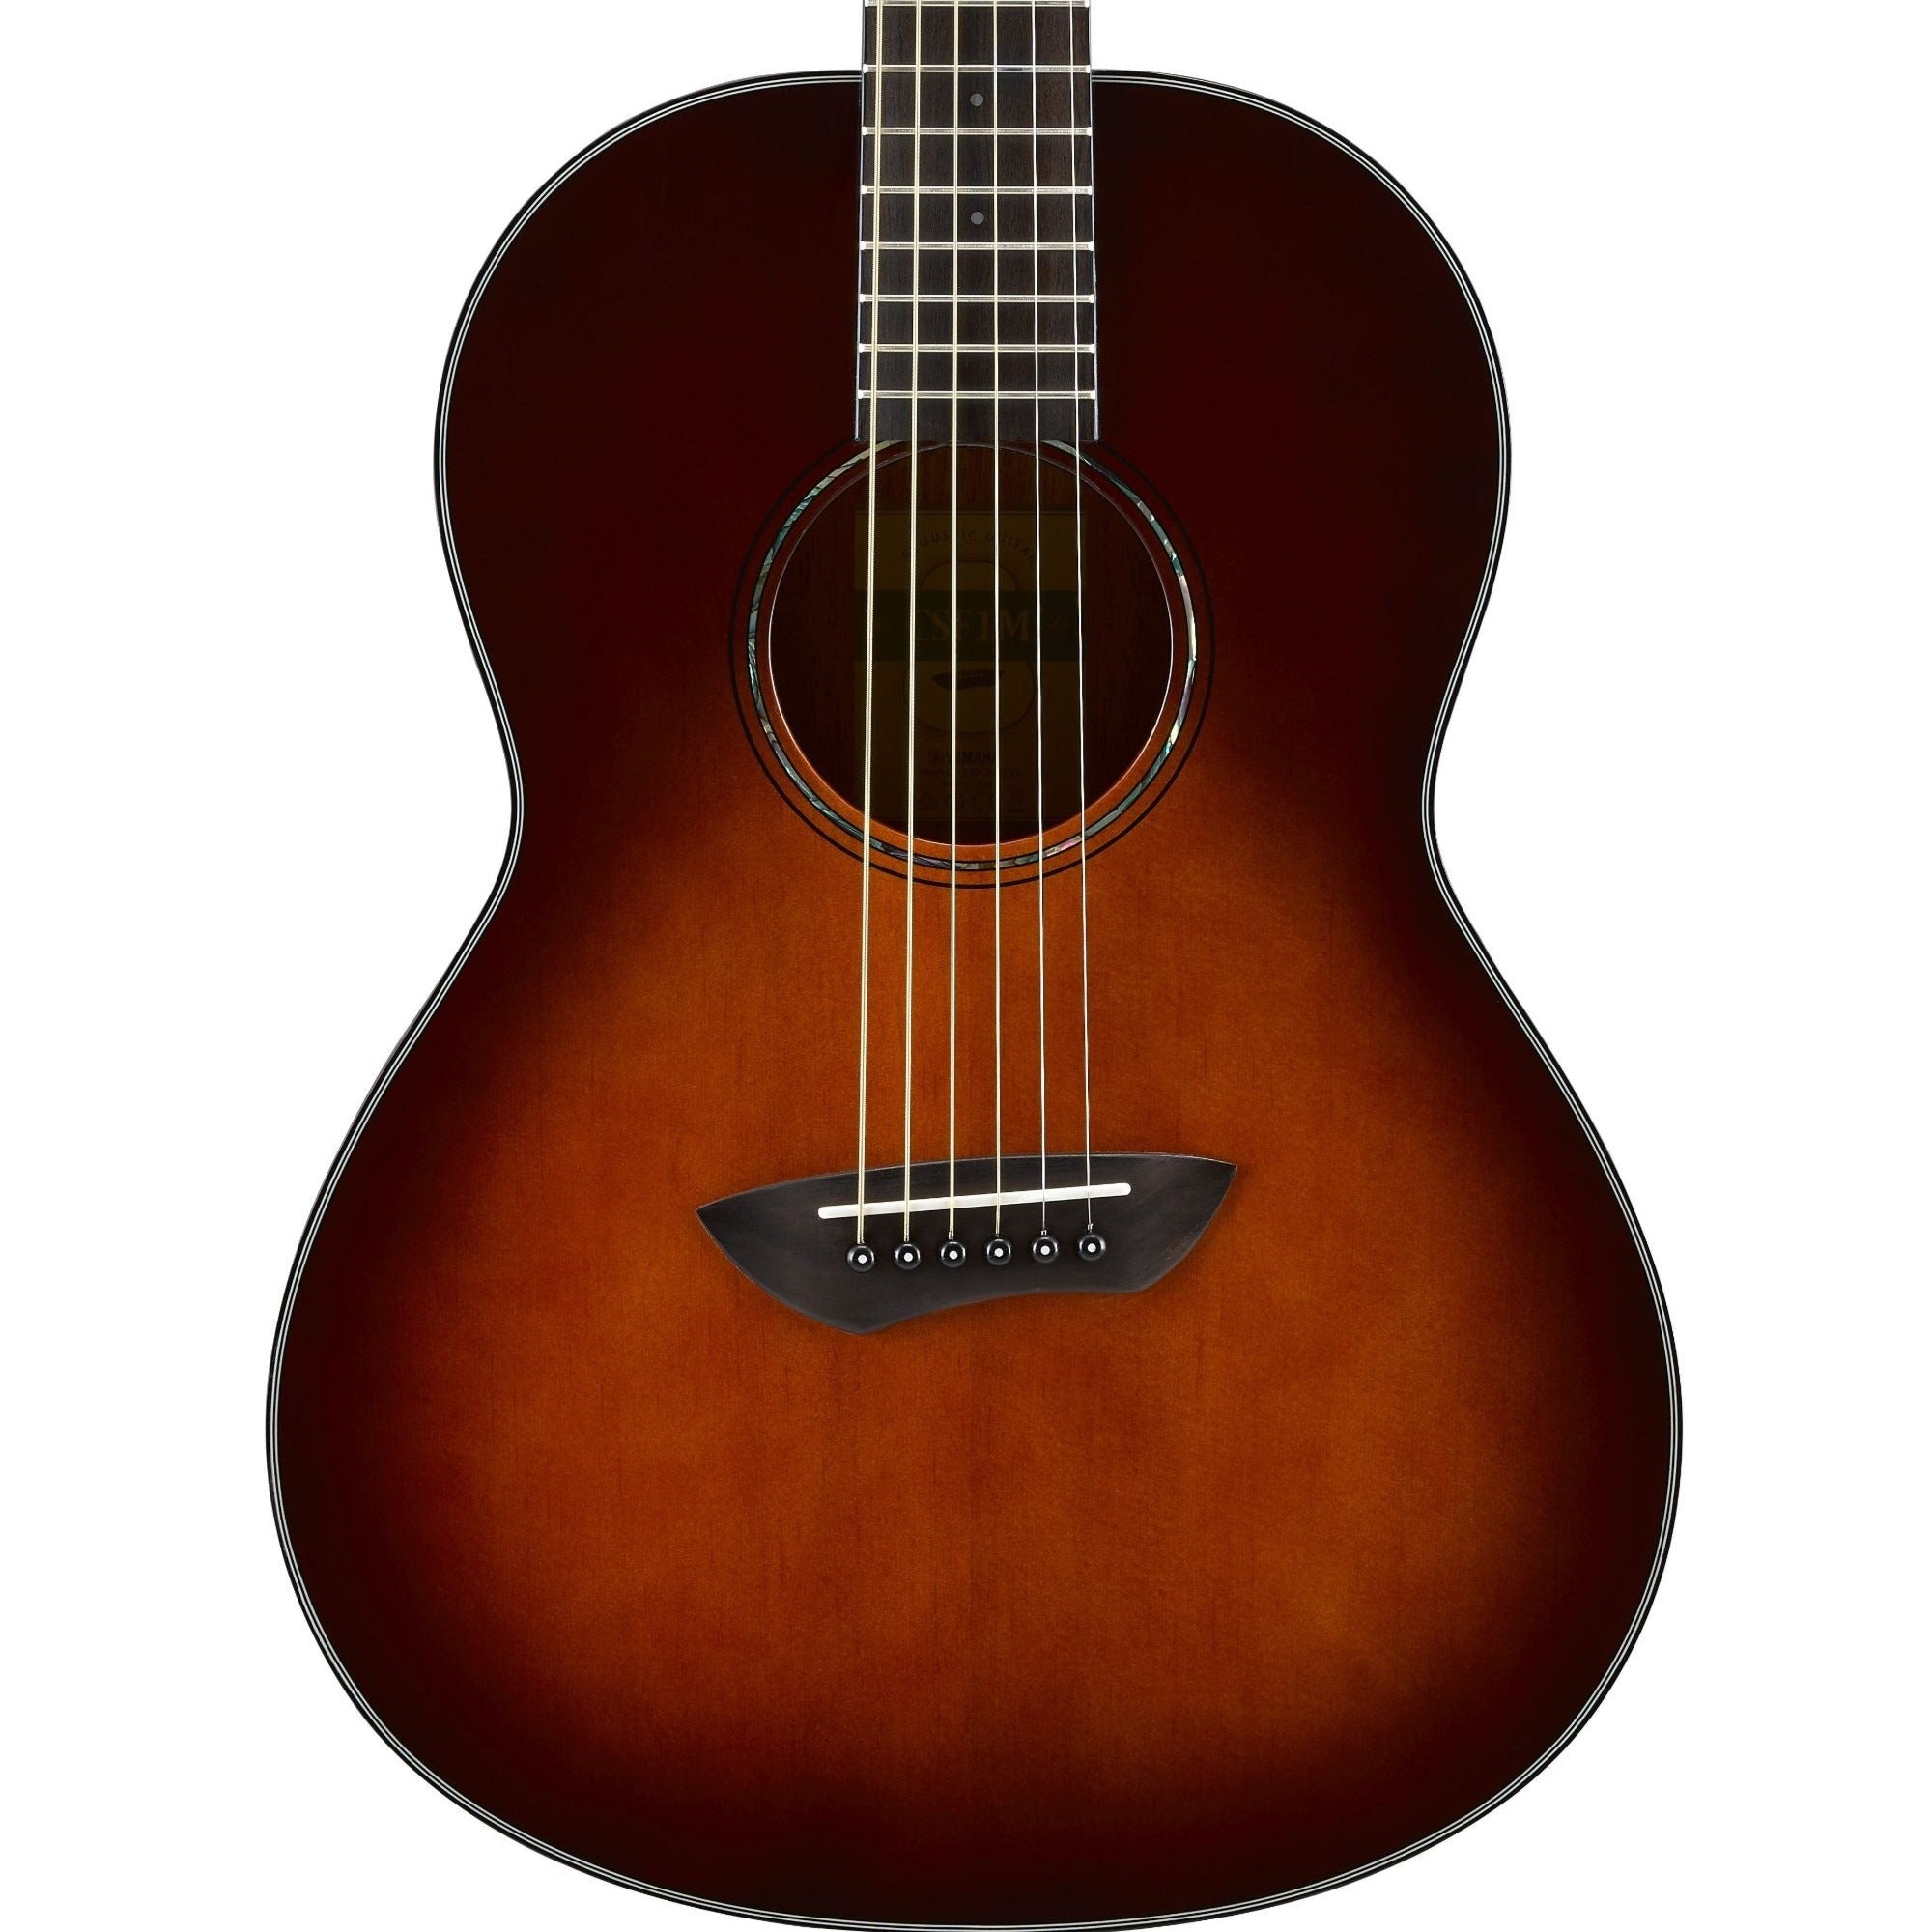 Yamaha CSF1M Modern Parlor Acoustic Guitar, Tobacco Brown Sunburst